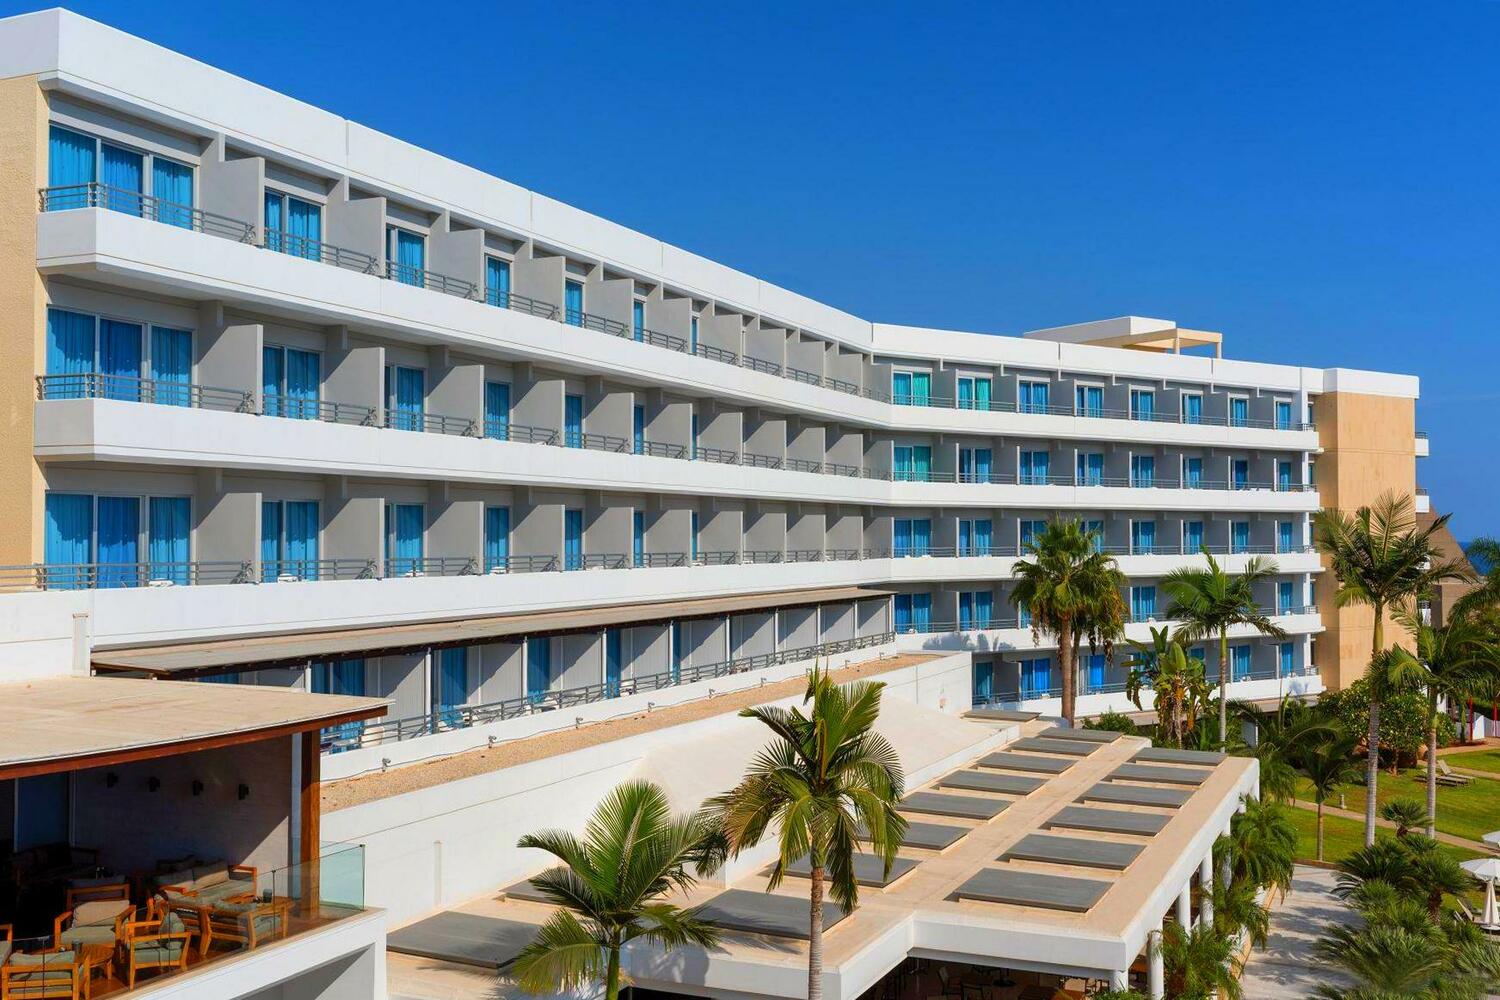 <span style="font-weight: bold;">Mediterranean Beach Hotel 4 *&nbsp;</span><br>